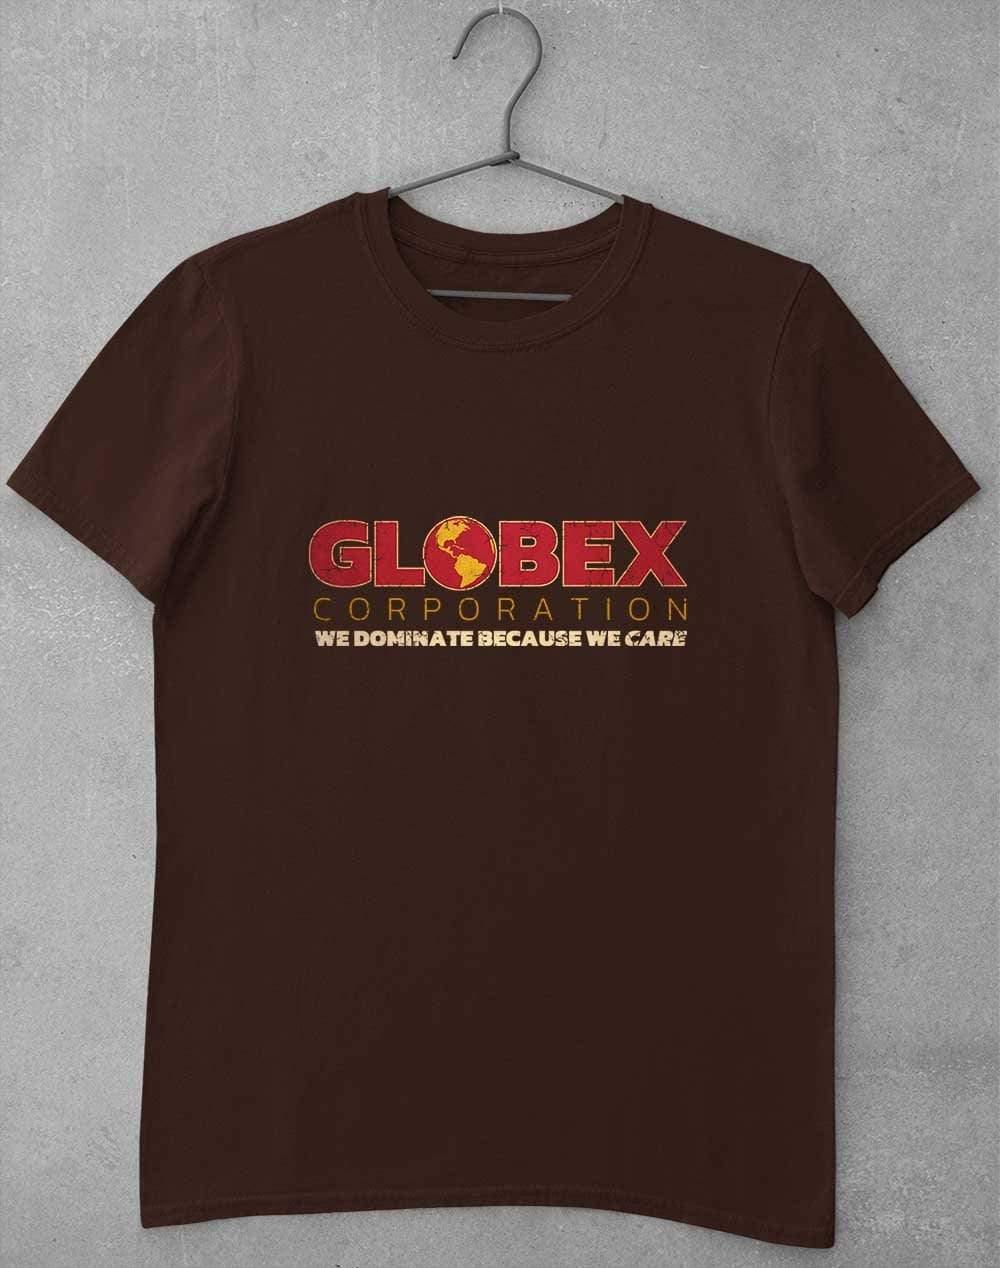 Globex Corporation T-Shirt S / Dark Chocolate  - Off World Tees